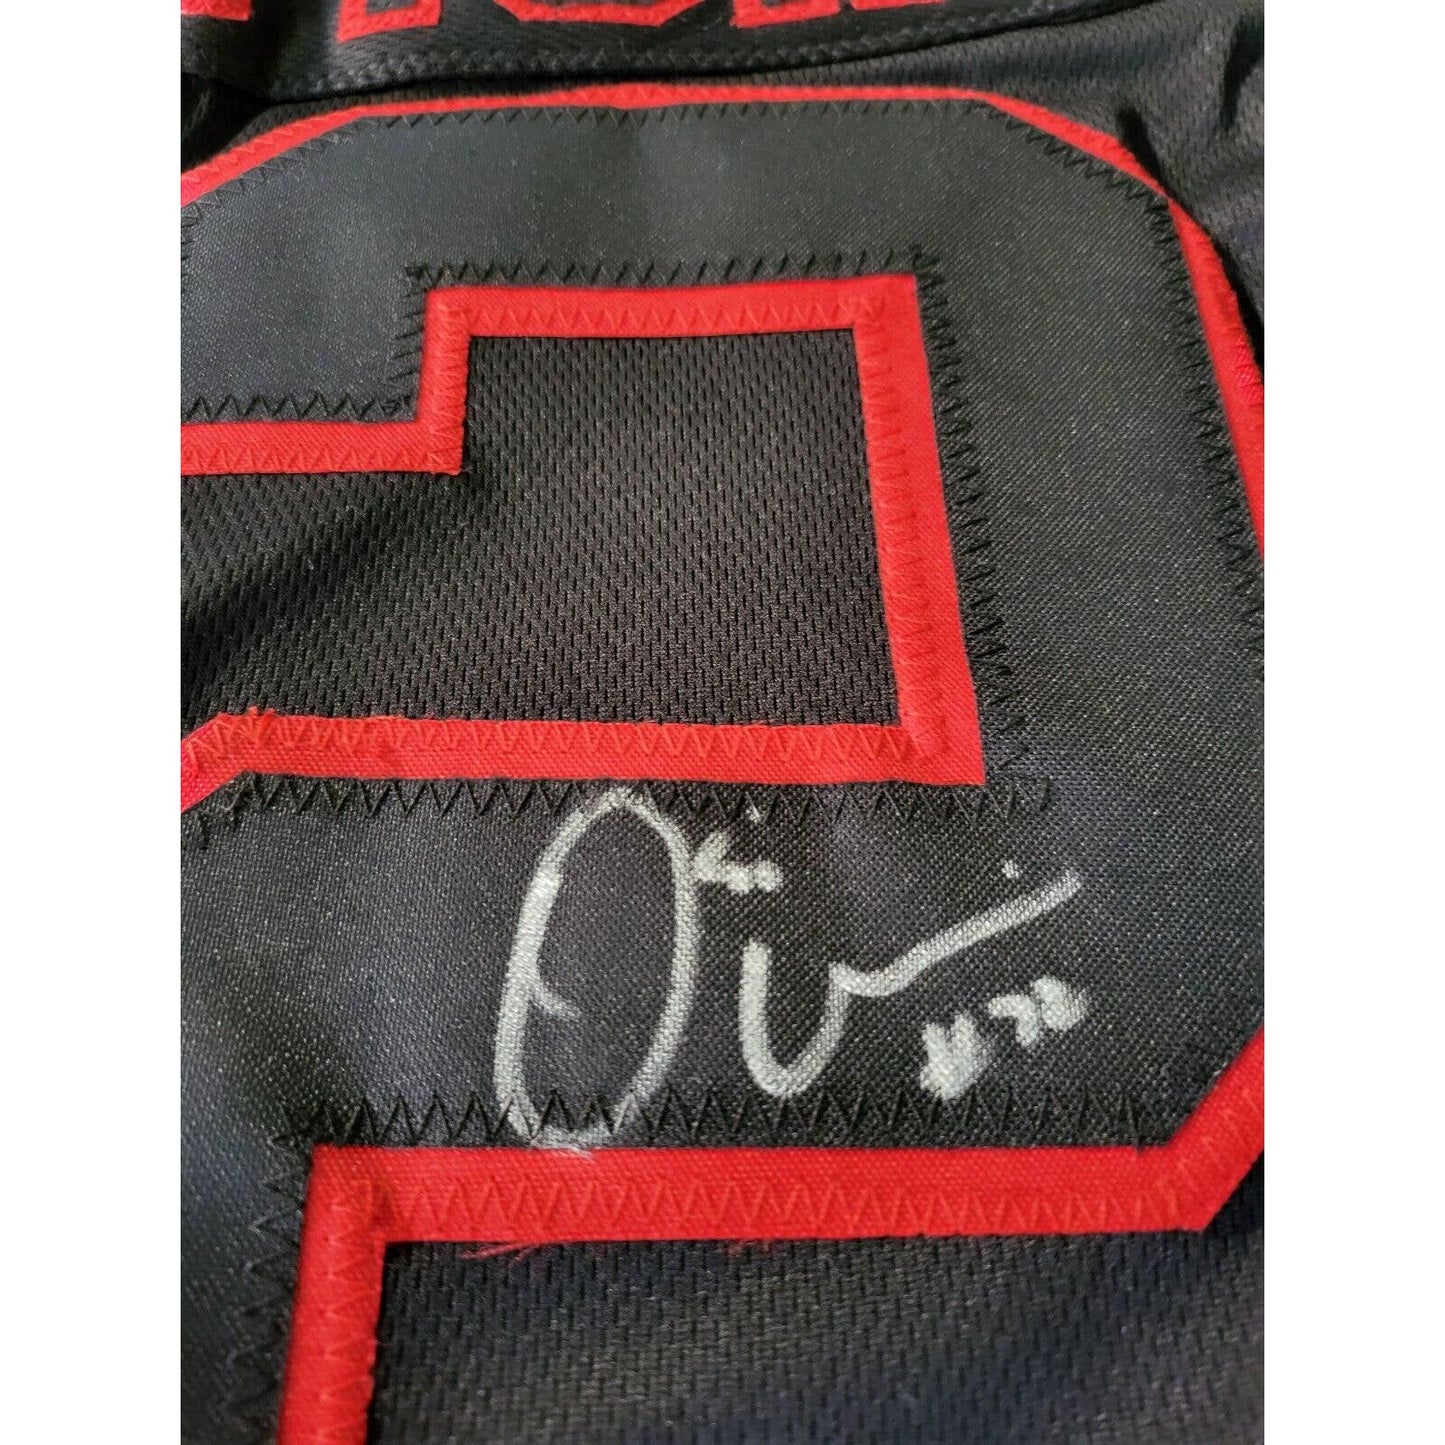 Osi Umenyiora Autographed/Signed Jersey JSA COA New York Giants - TreasuresEvolved